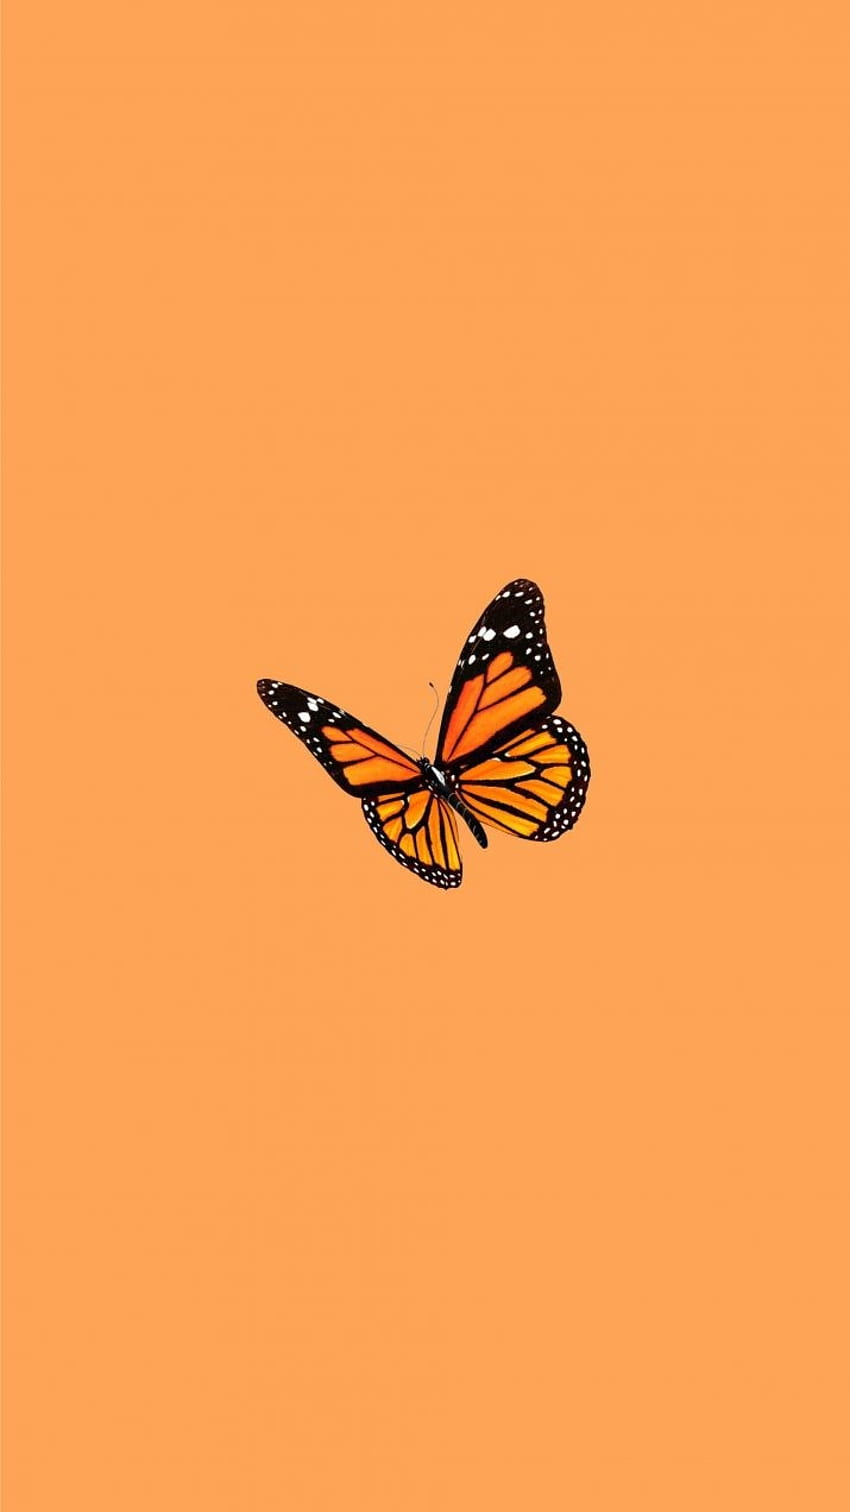 An orange butterfly on an orange background - Sun